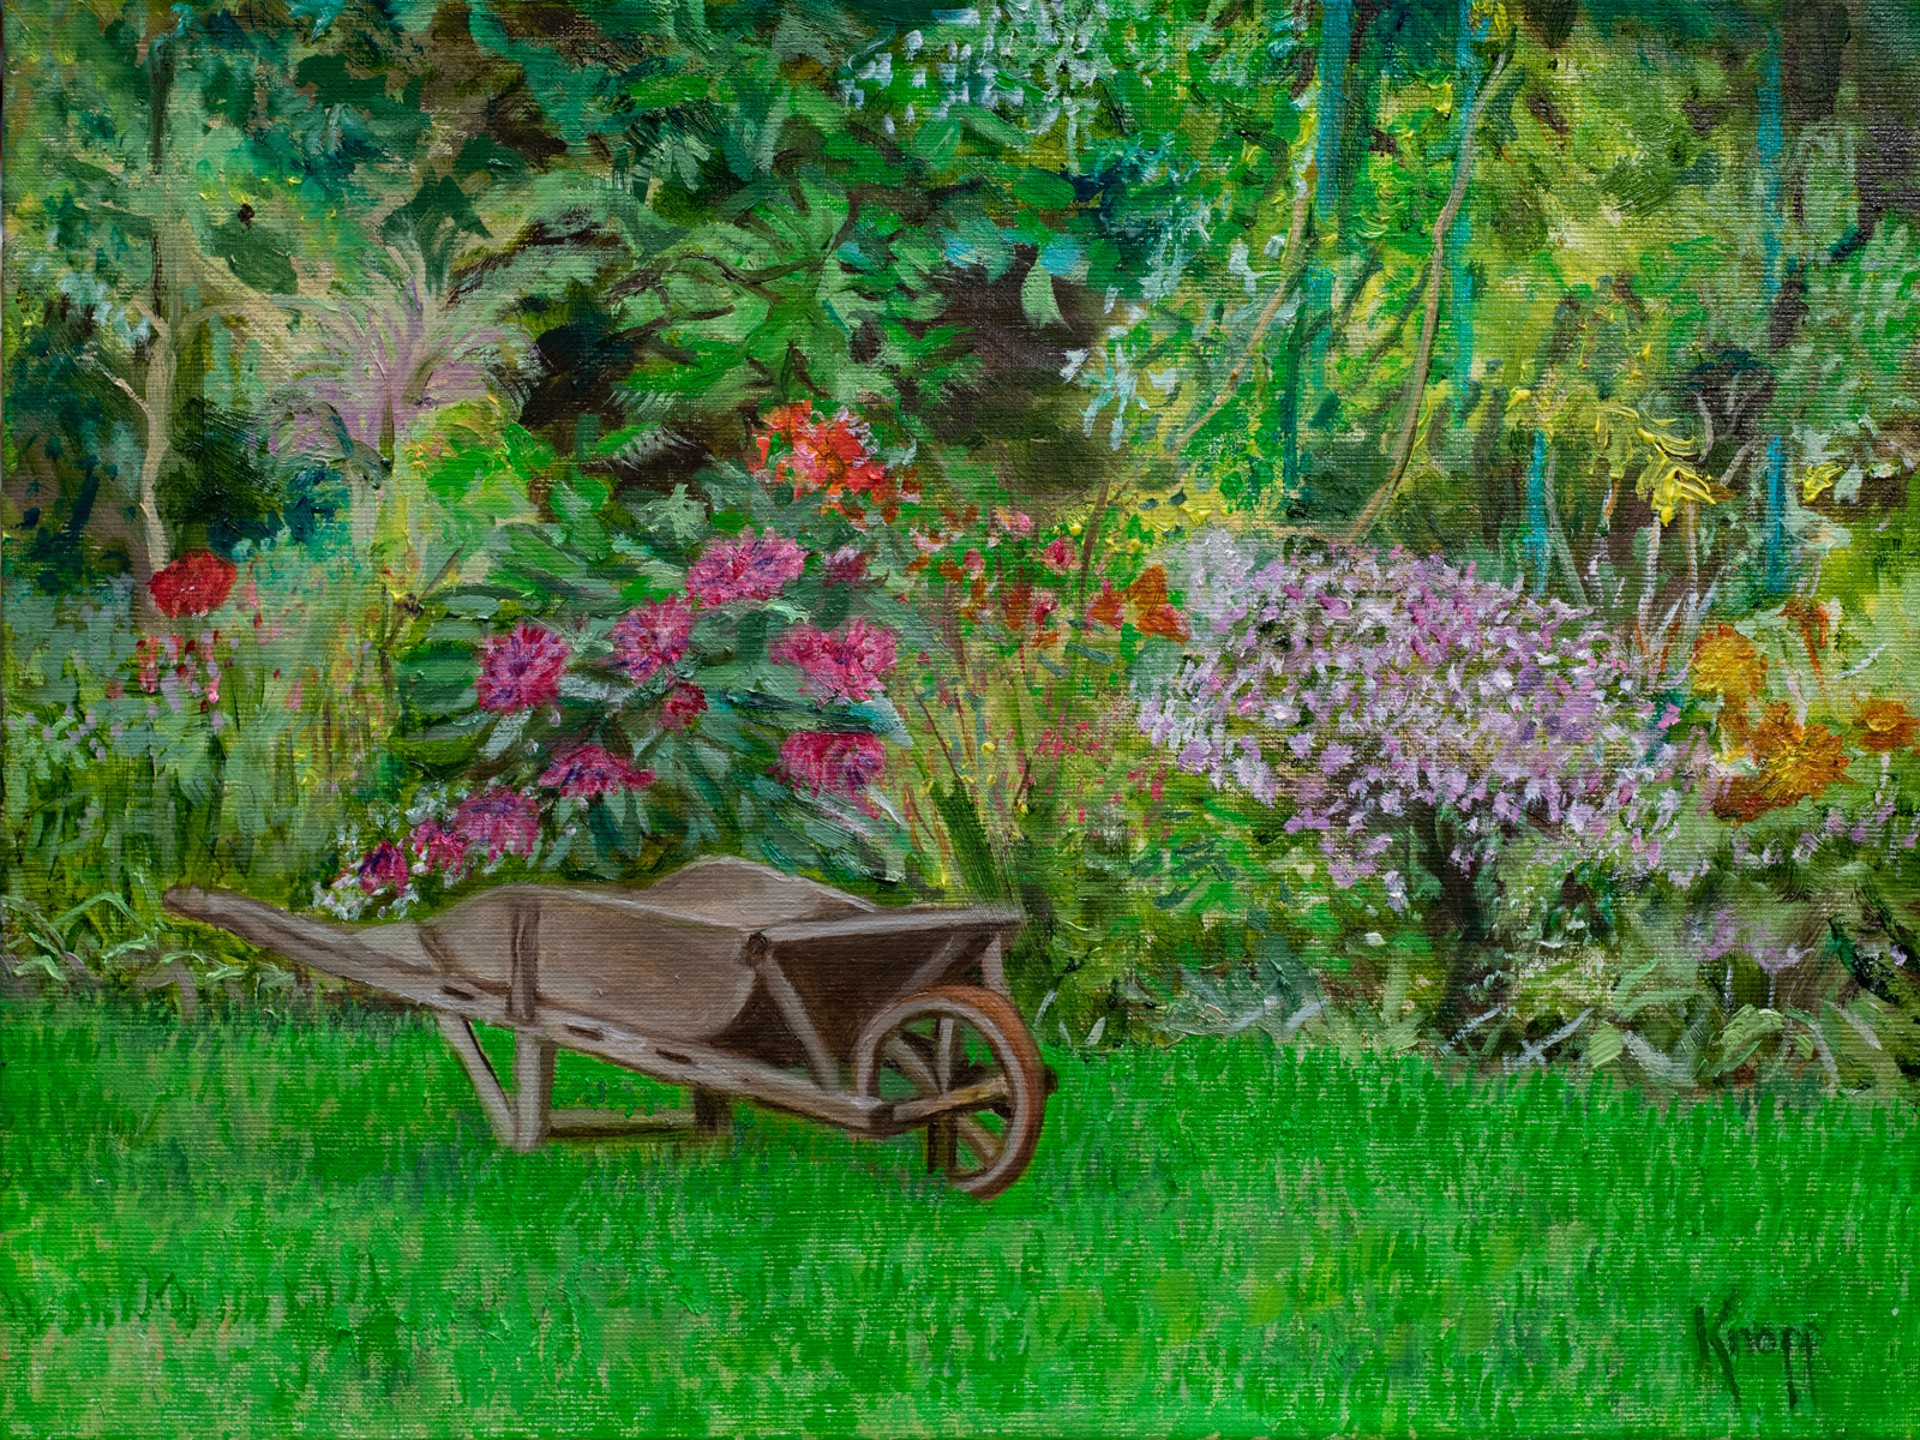 Monet's Wheel barrel by Kathy Knopp